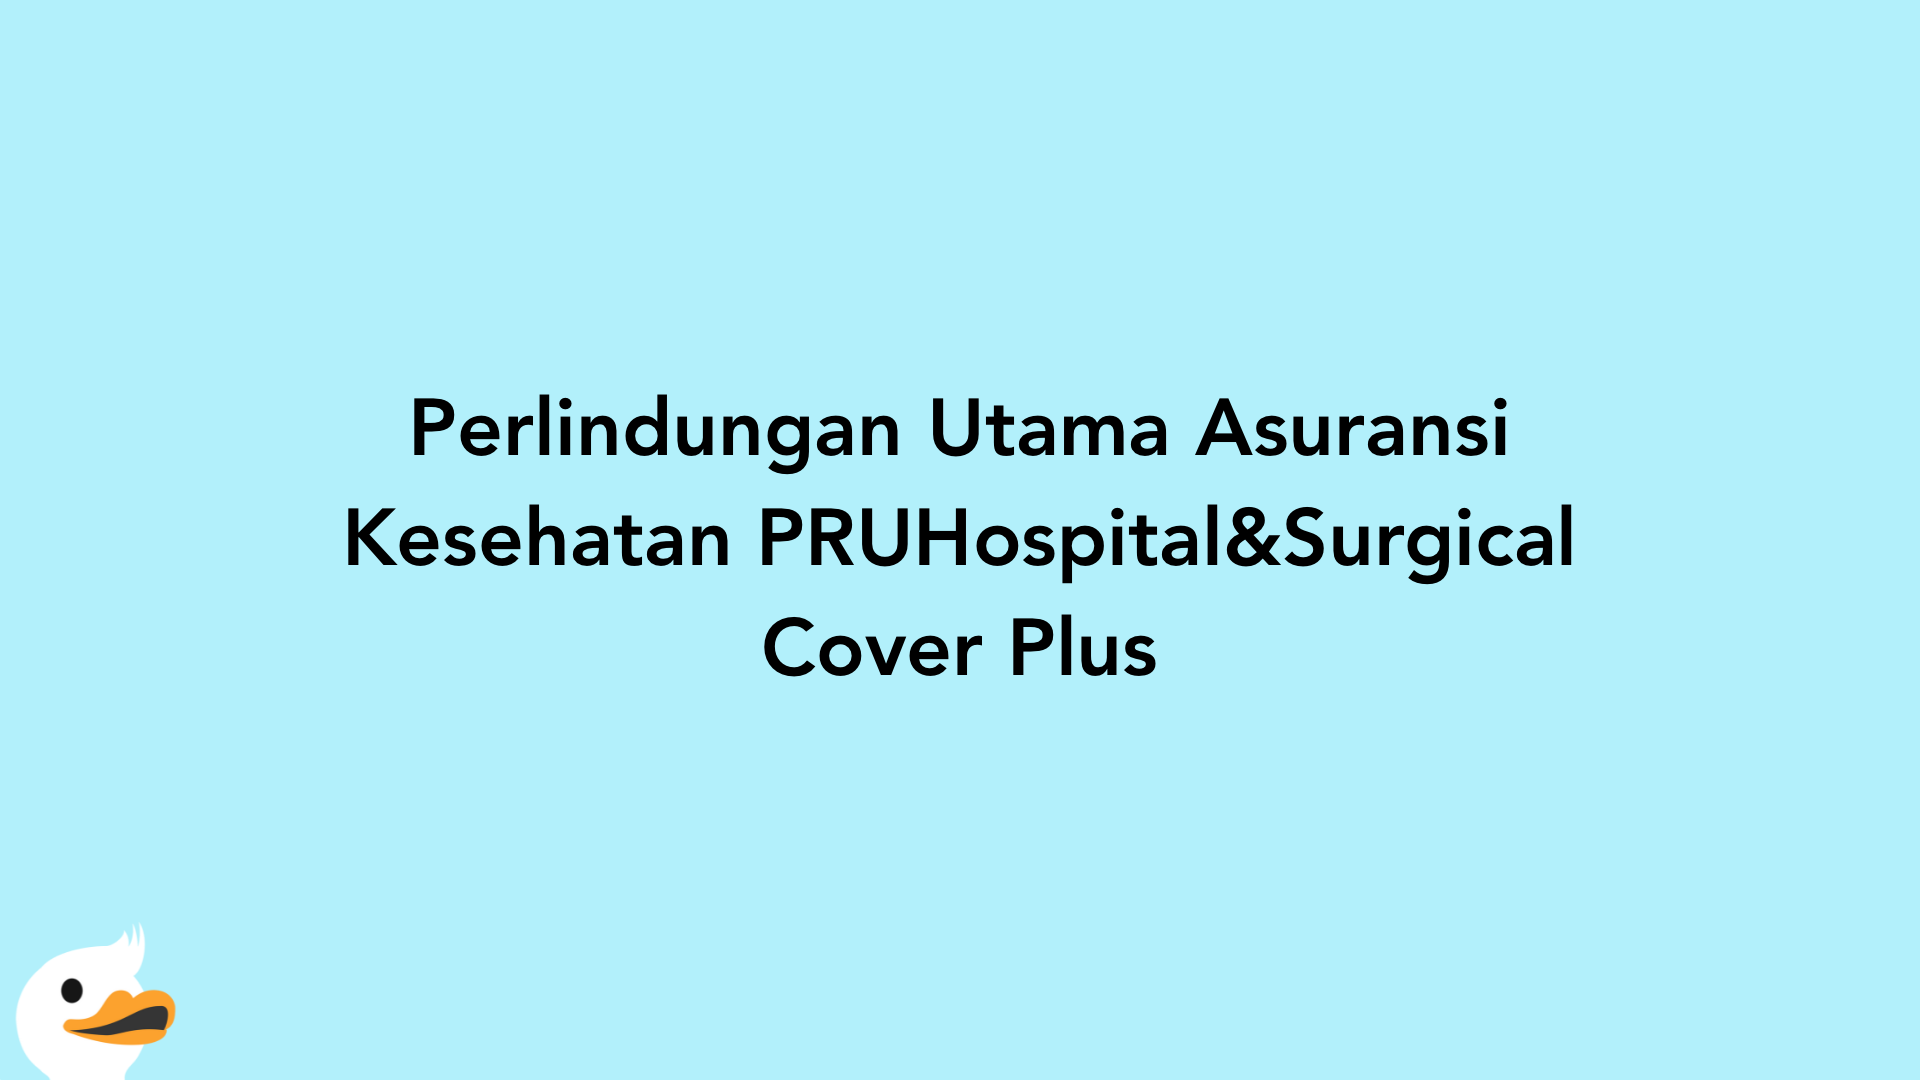 Perlindungan Utama Asuransi Kesehatan PRUHospital&Surgical Cover Plus